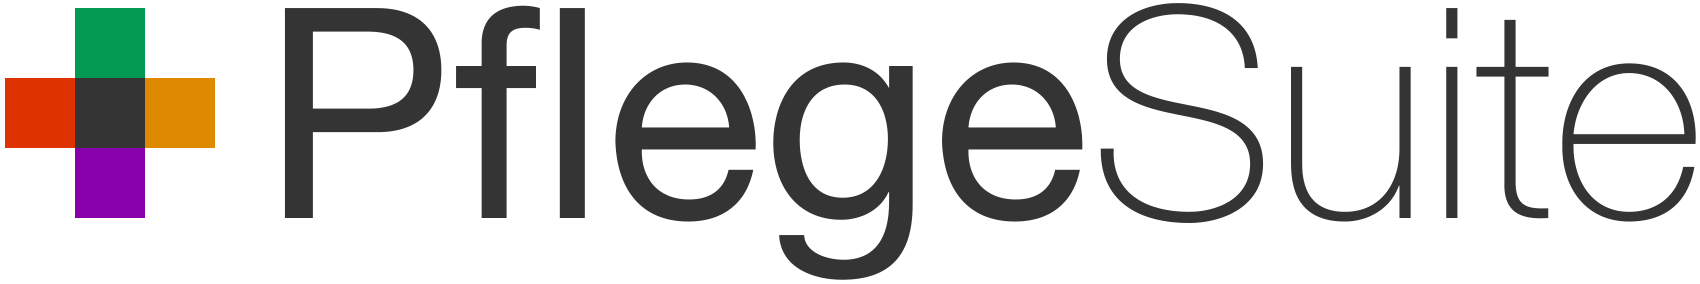 click-on-logo Logo